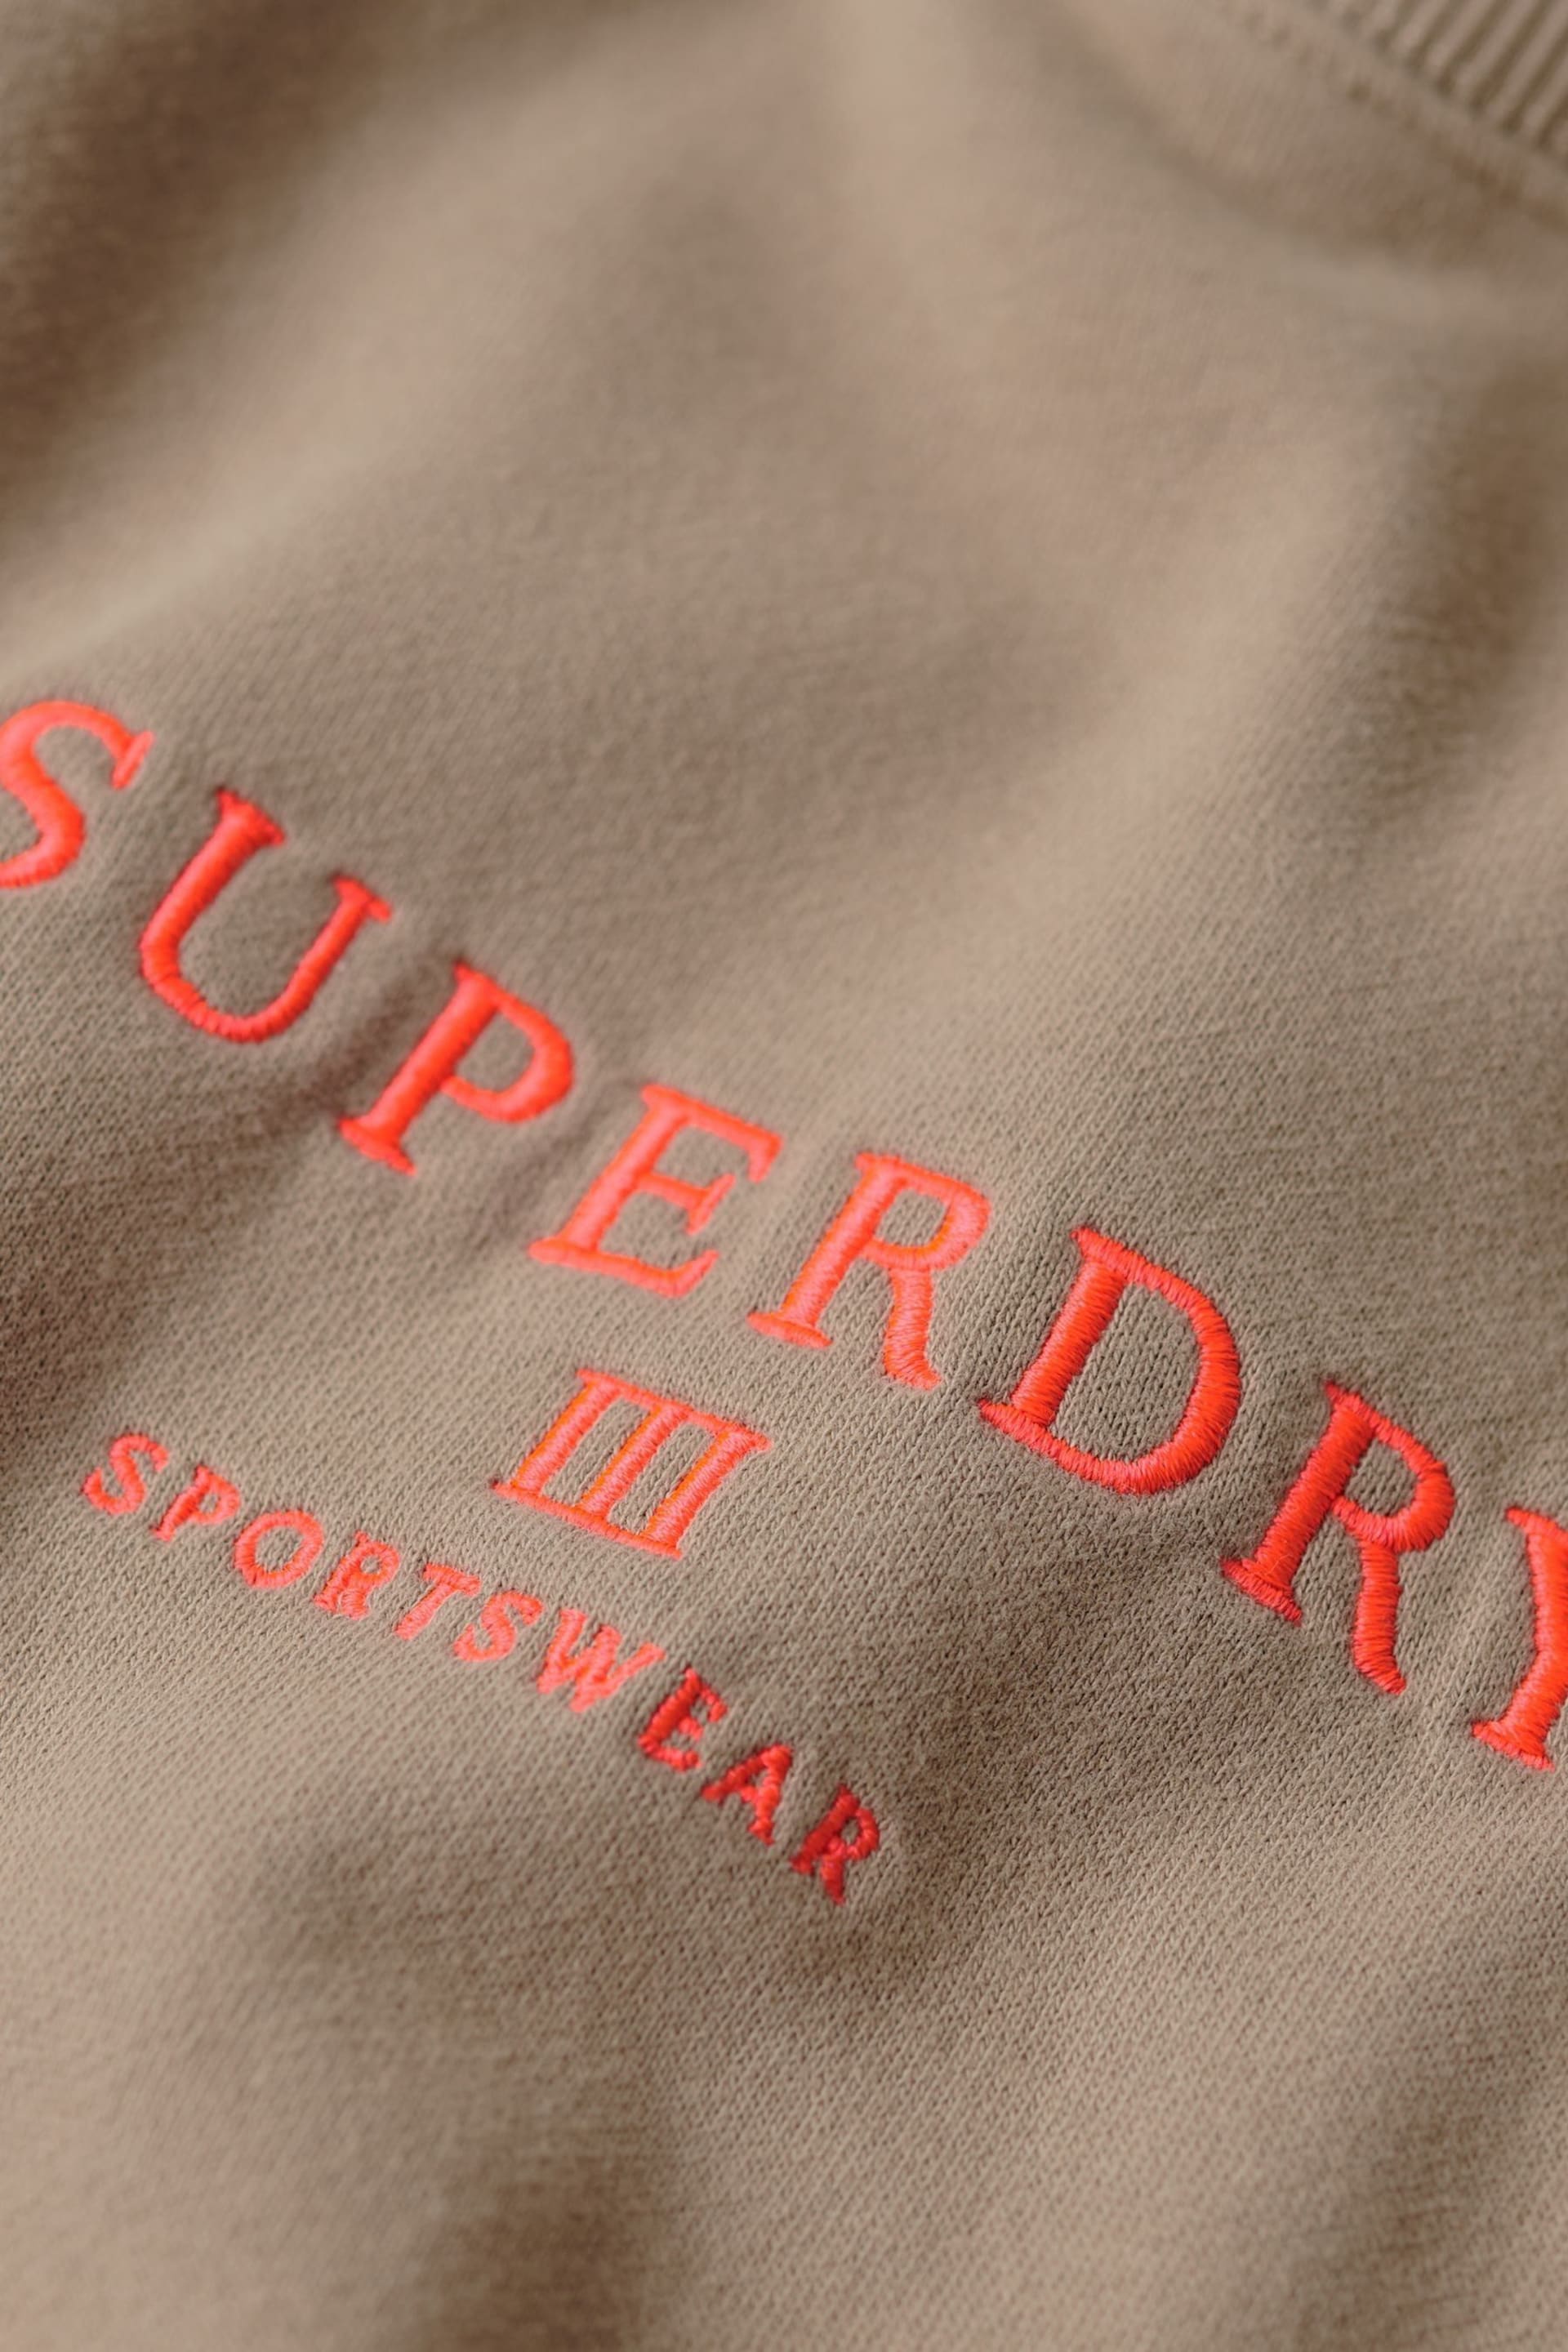 Superdry Cream Embroidered Loose Crew Sweatshirt - Image 6 of 6